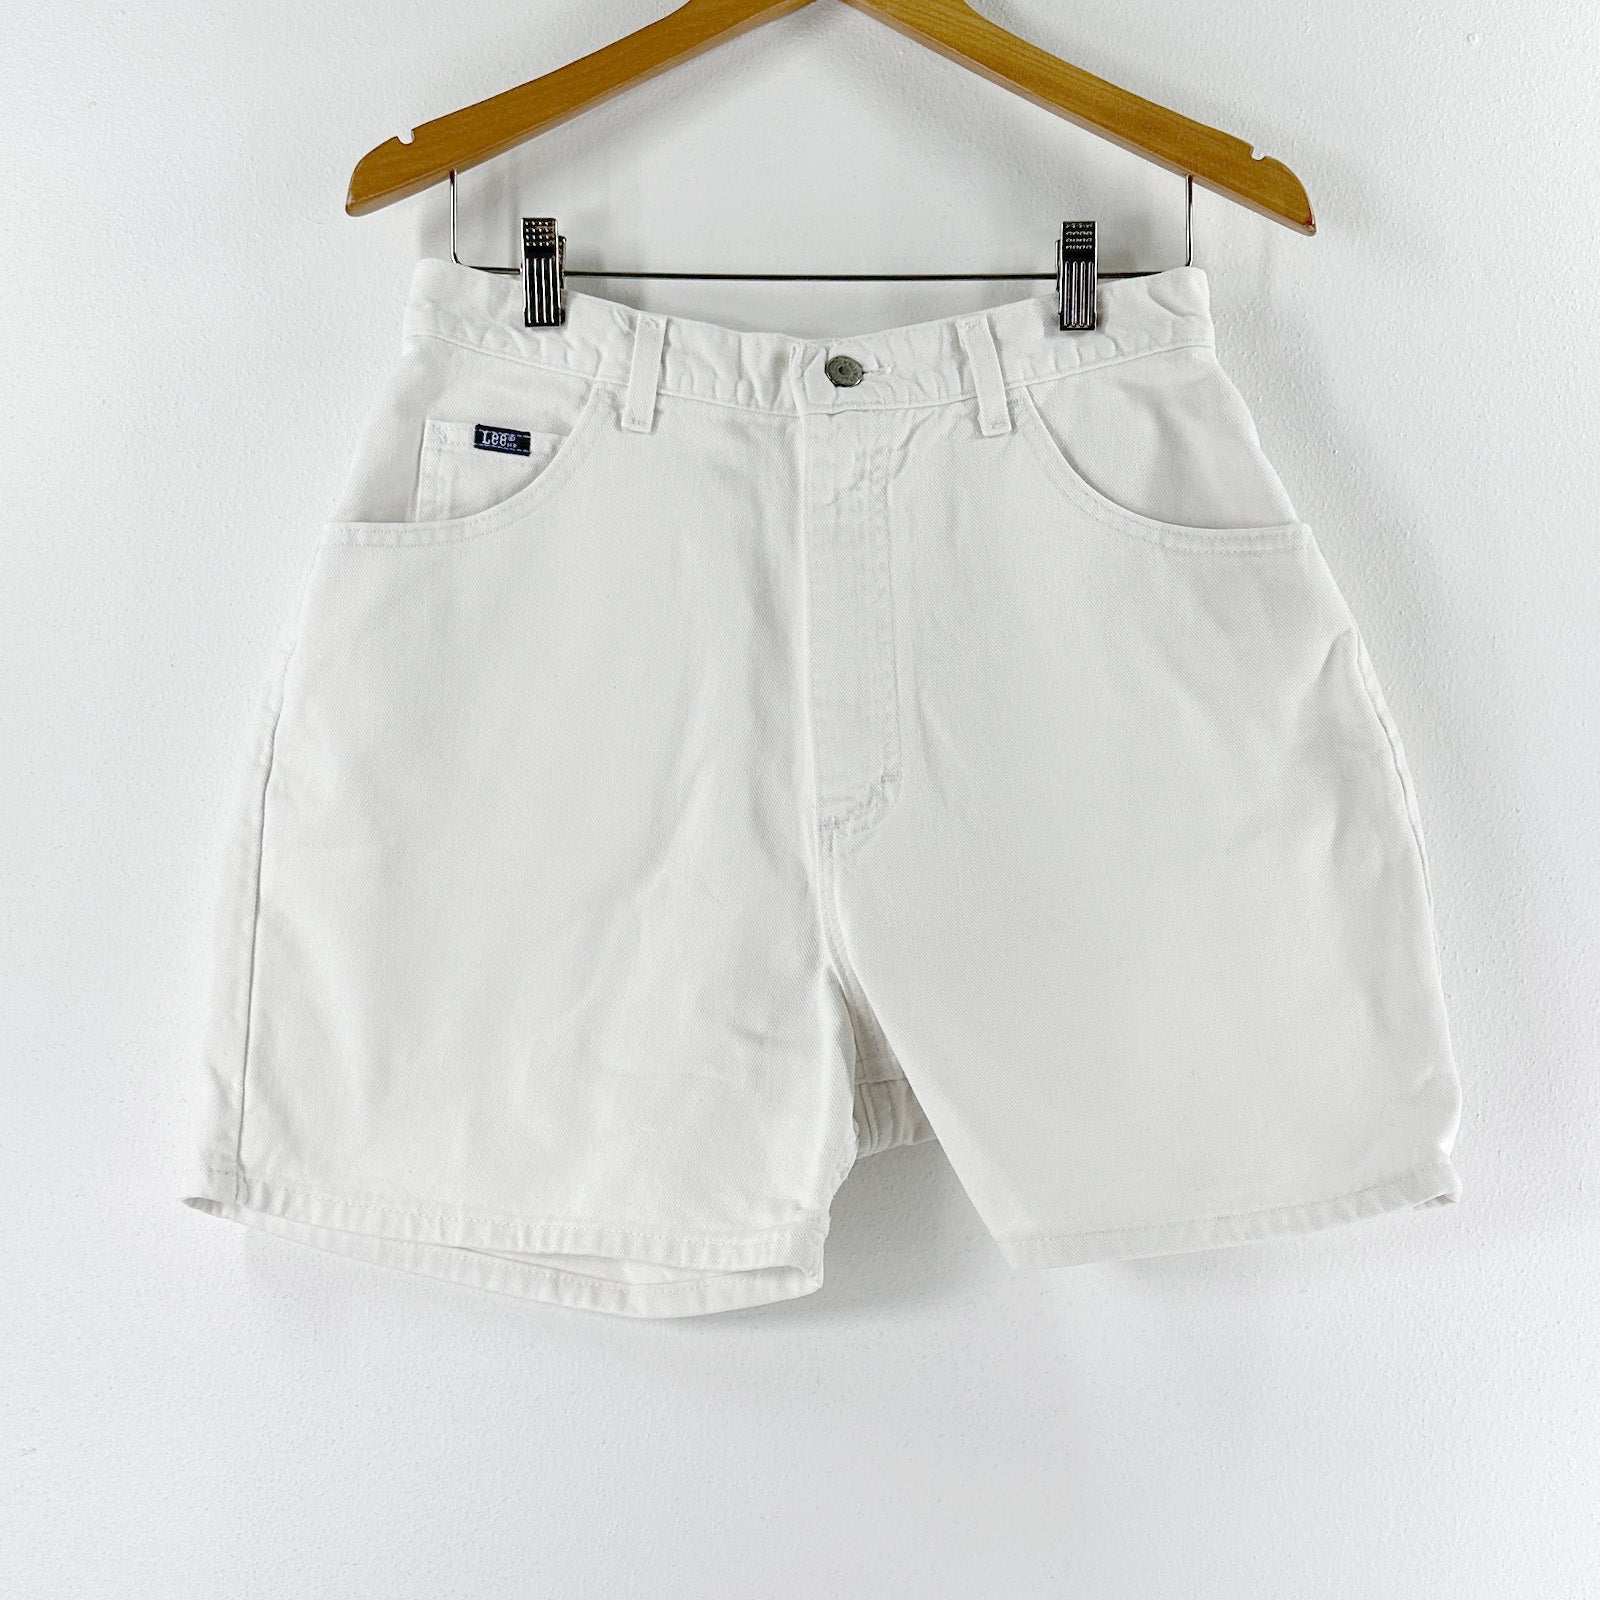 Vintage Lee Shorts - 100% Cotton - 29 Waist Great Lakes Reclaimed Denim